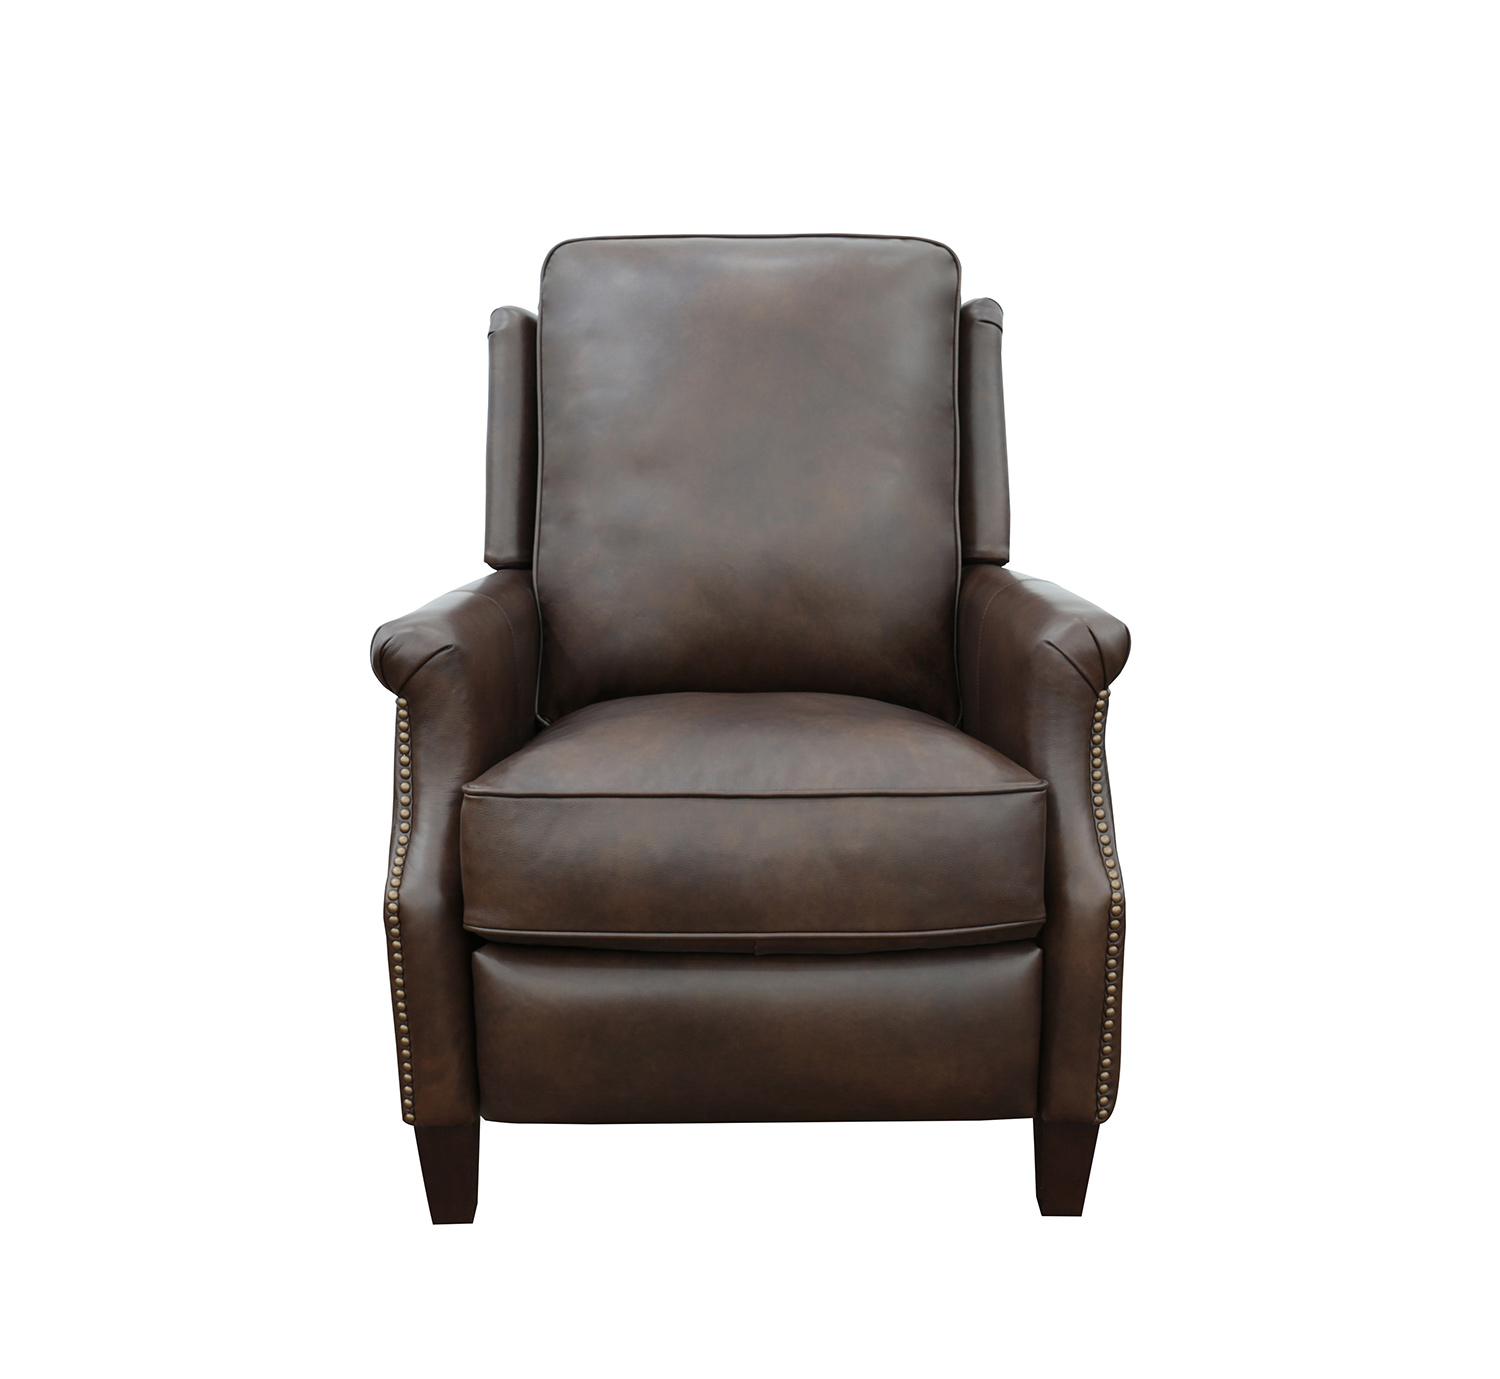 Barcalounger Riley Power Recliner Chair - Ashford Walnut/All Leather